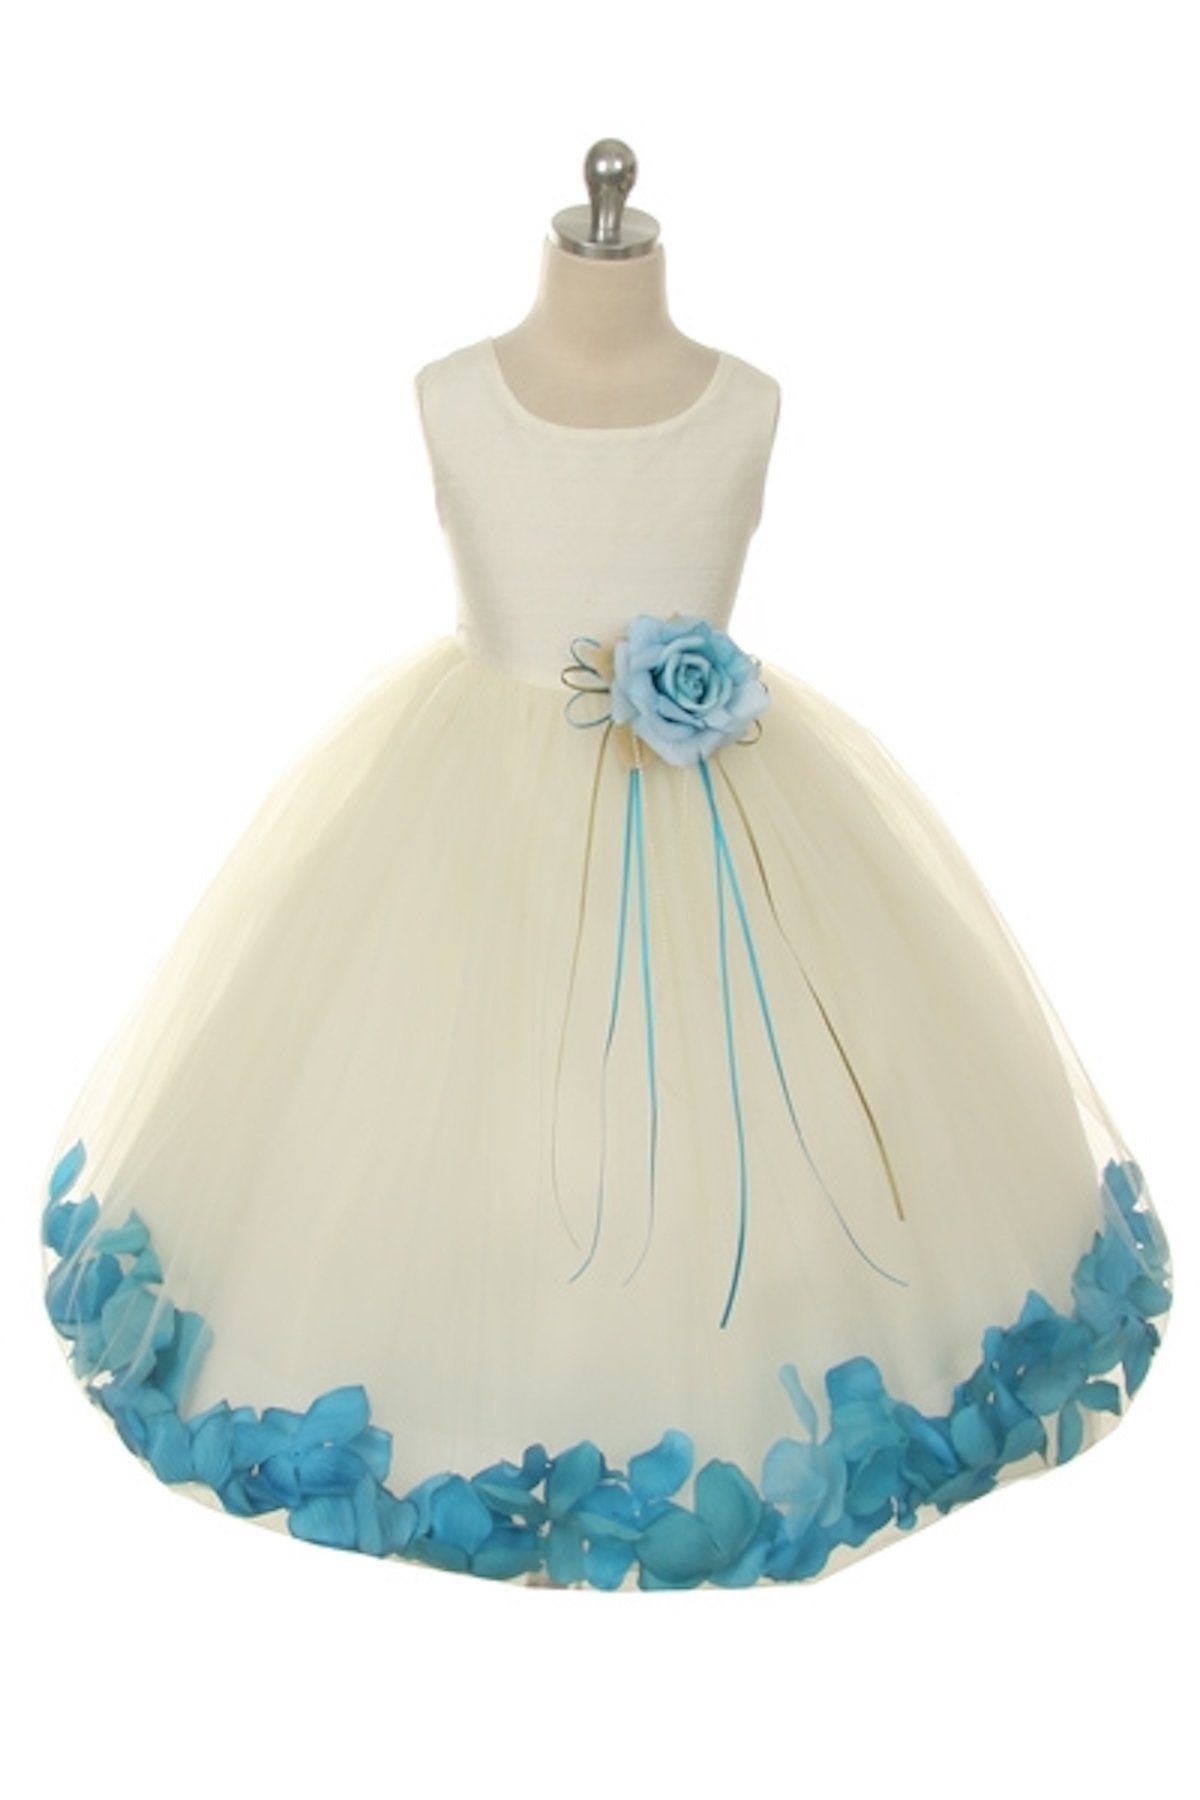 Dress - Satin Flower Petal Girl Dress (Ivory Dress)